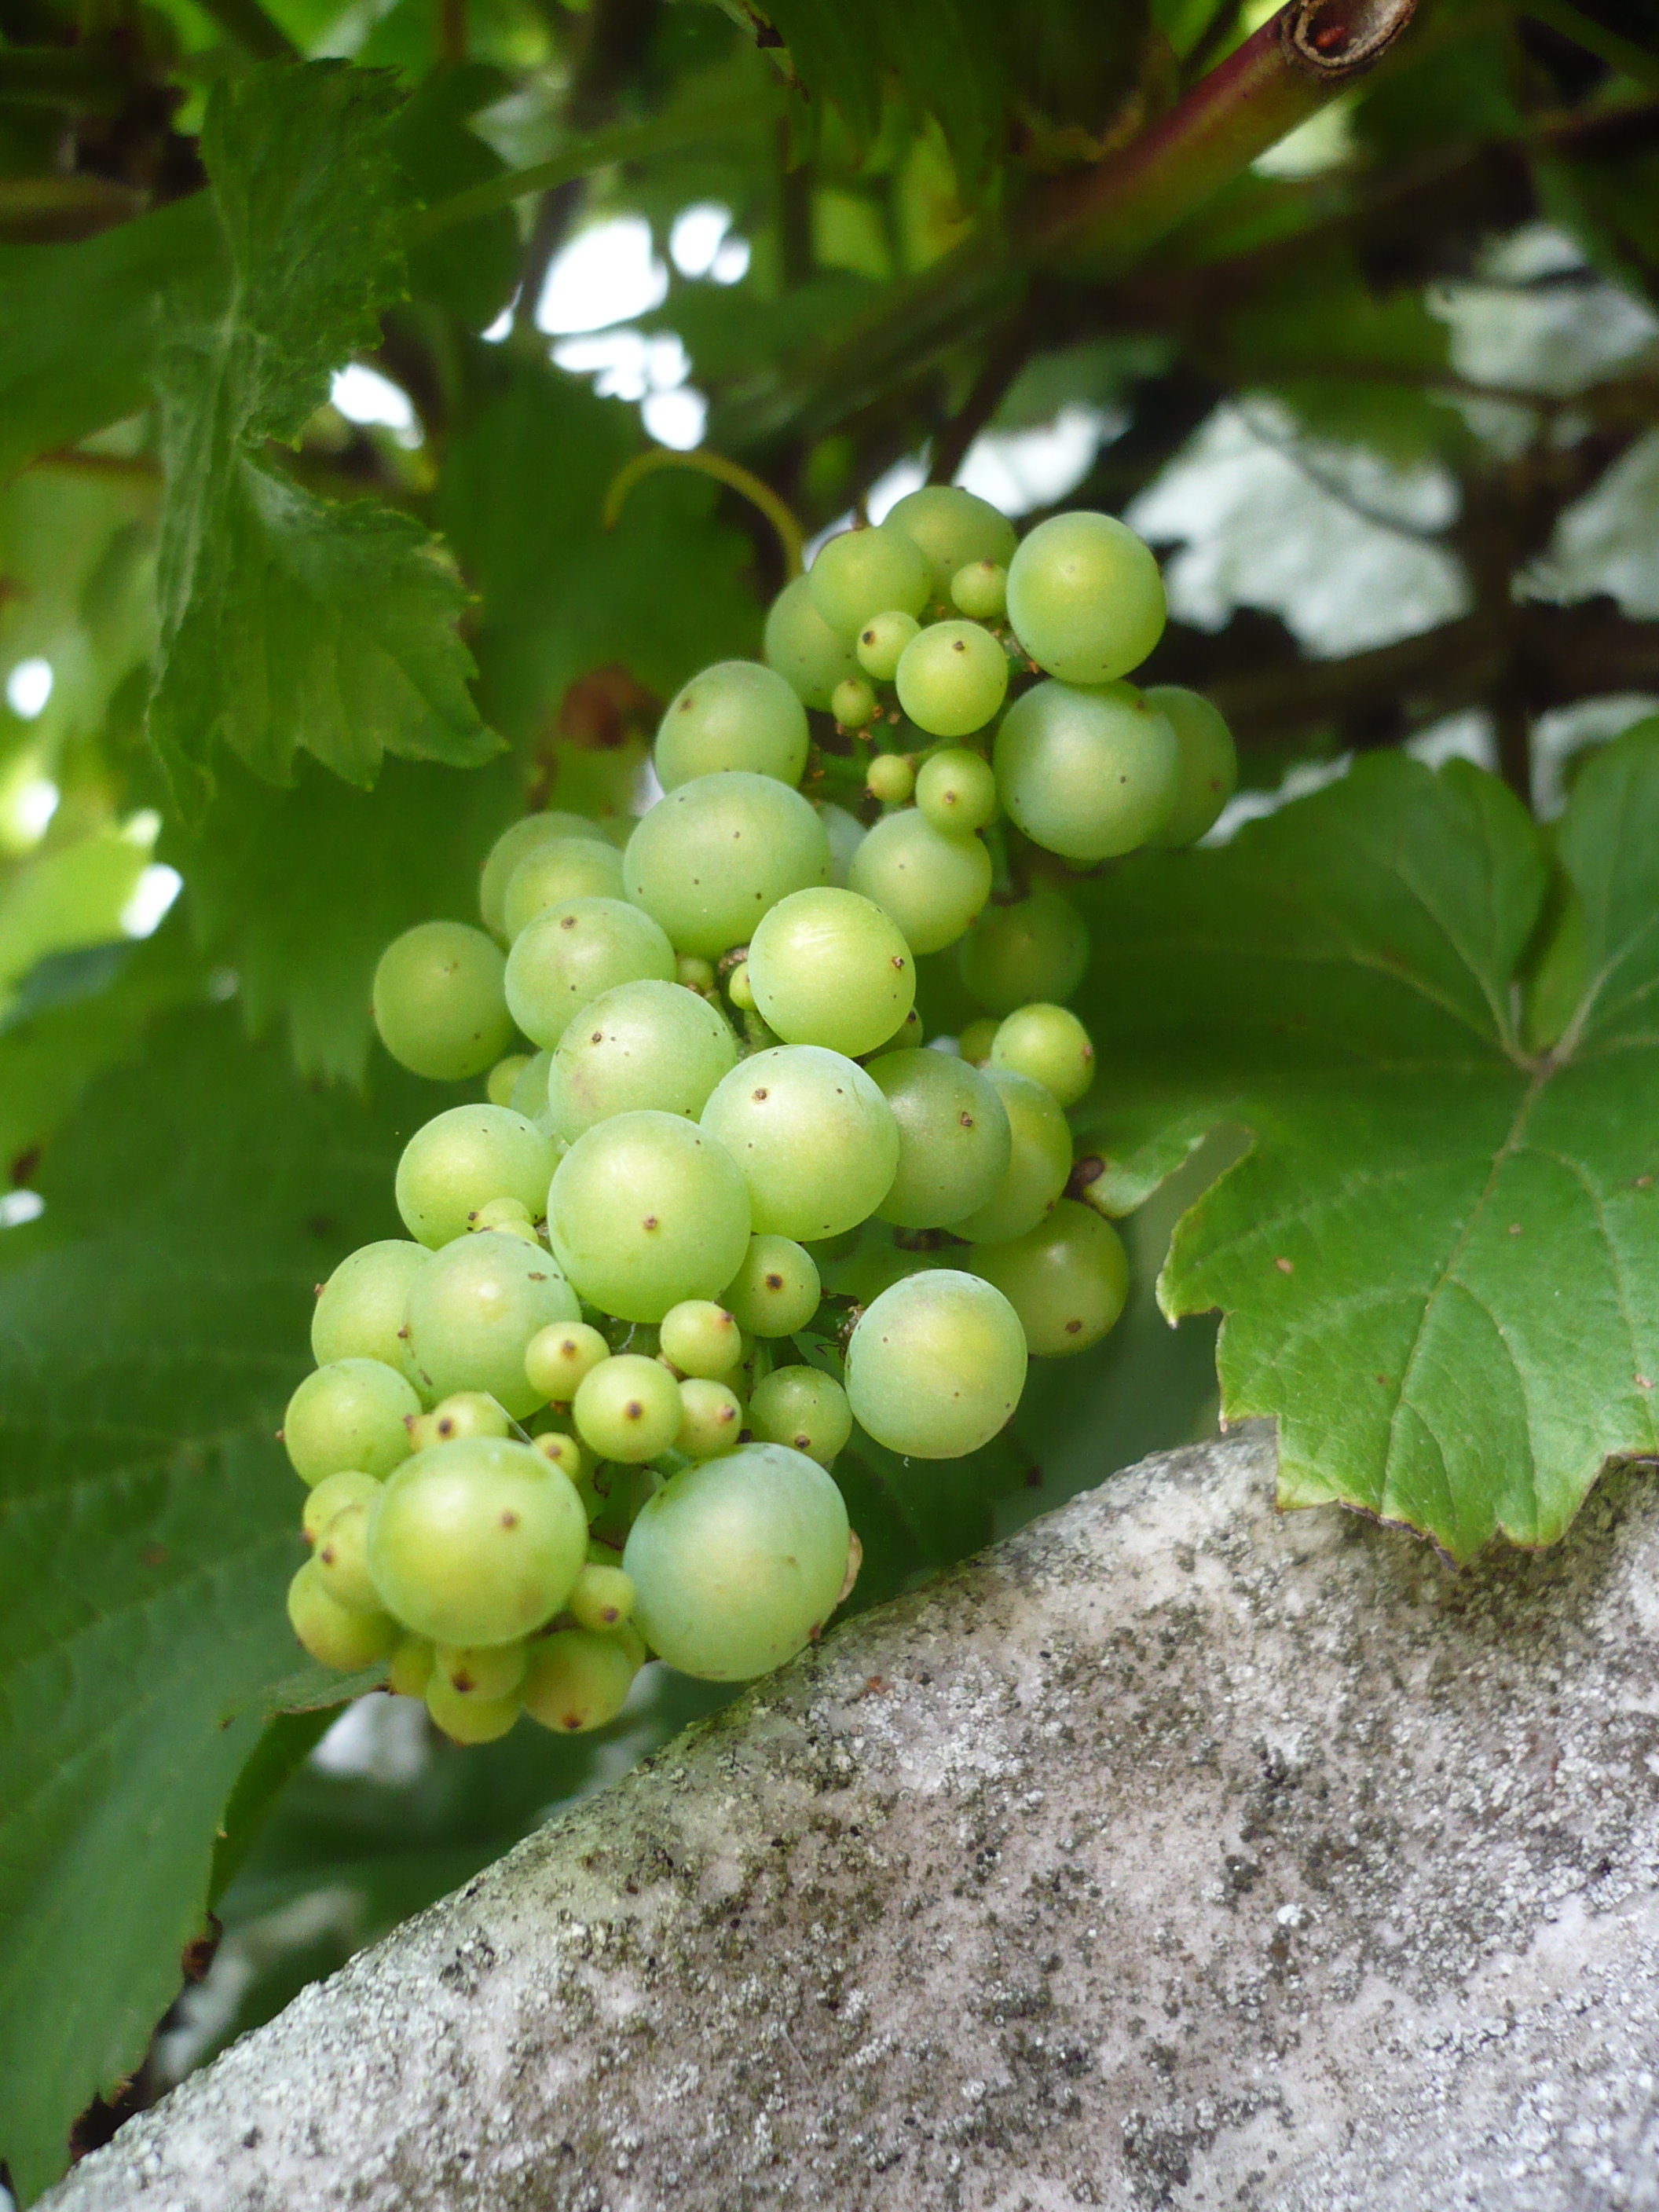 East Anglian grapes